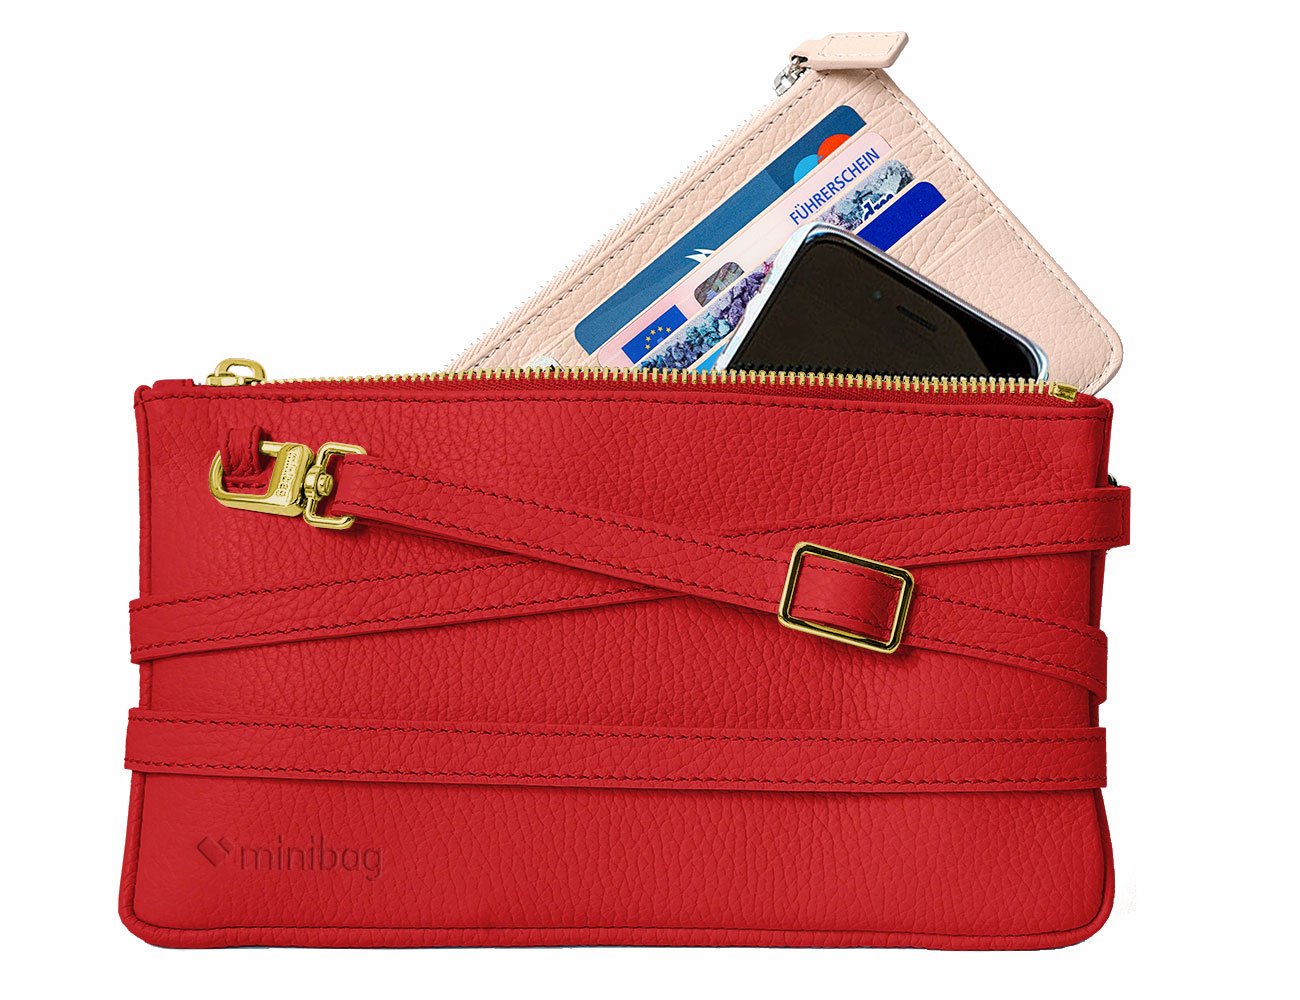 minibag red Edition GOLD, Ledertasche rot, Clutch rot, Minibag Wallet nude, Geldtasche zum Umhängen